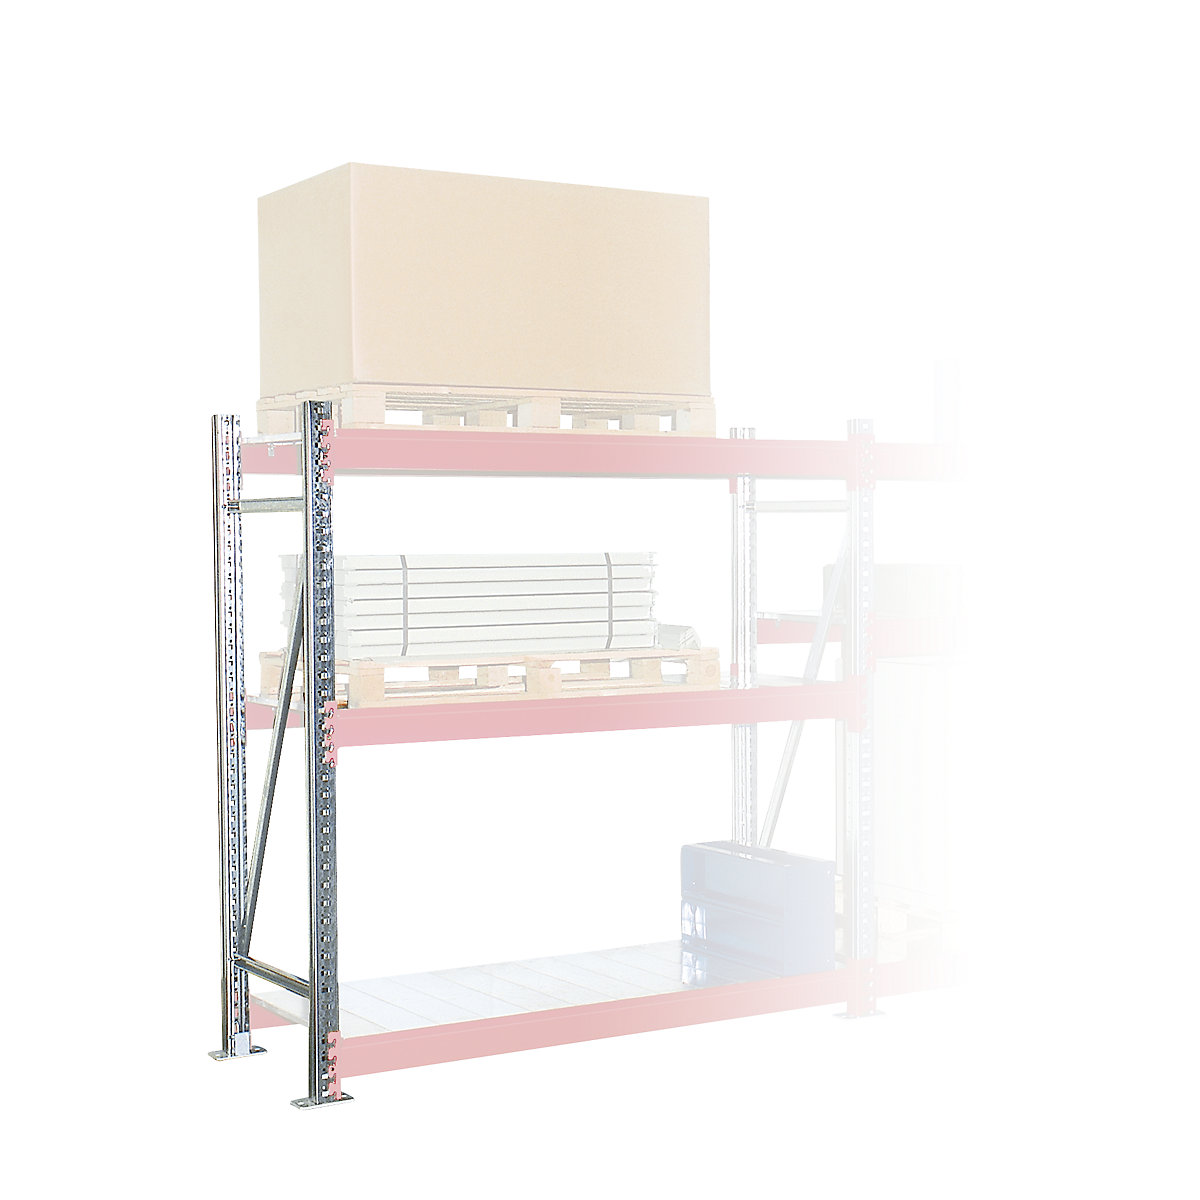 Heavy-load shelving support frames – eurokraft pro, frame height 3600 mm, frame depth 800 mm, zinc plated-2